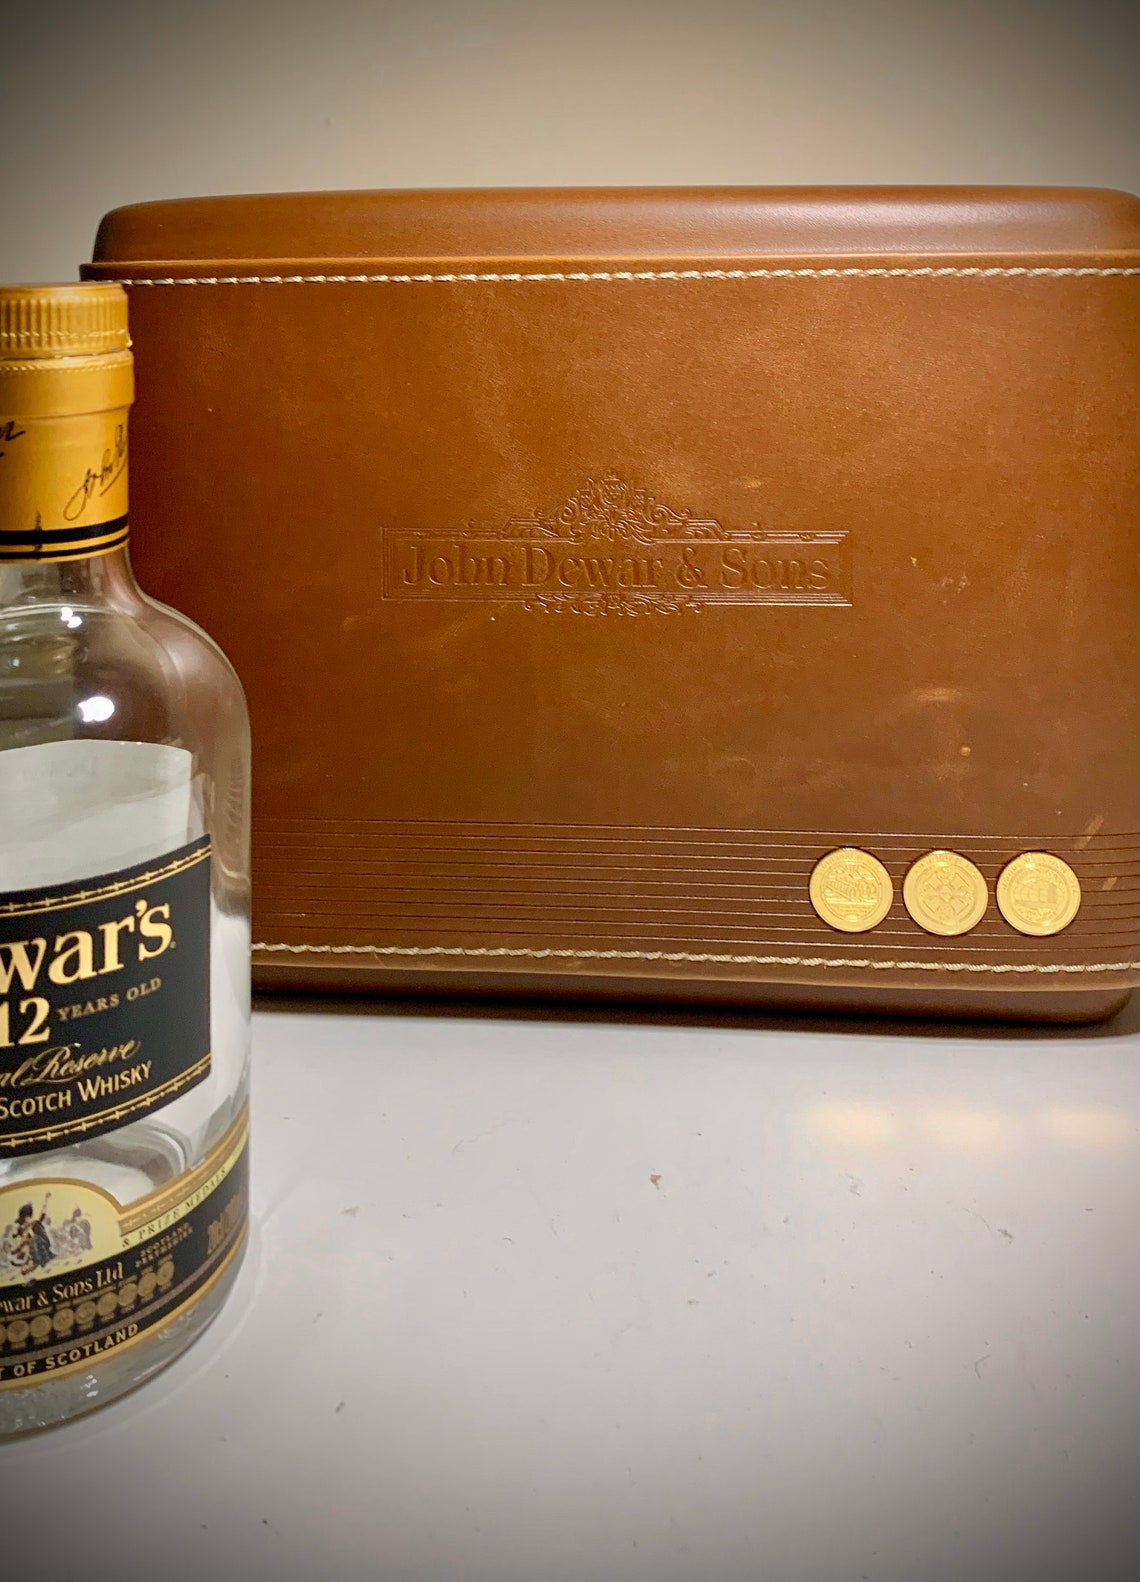 Dewars Scotch Multi Bottle Gift Set With Leather Case Mini